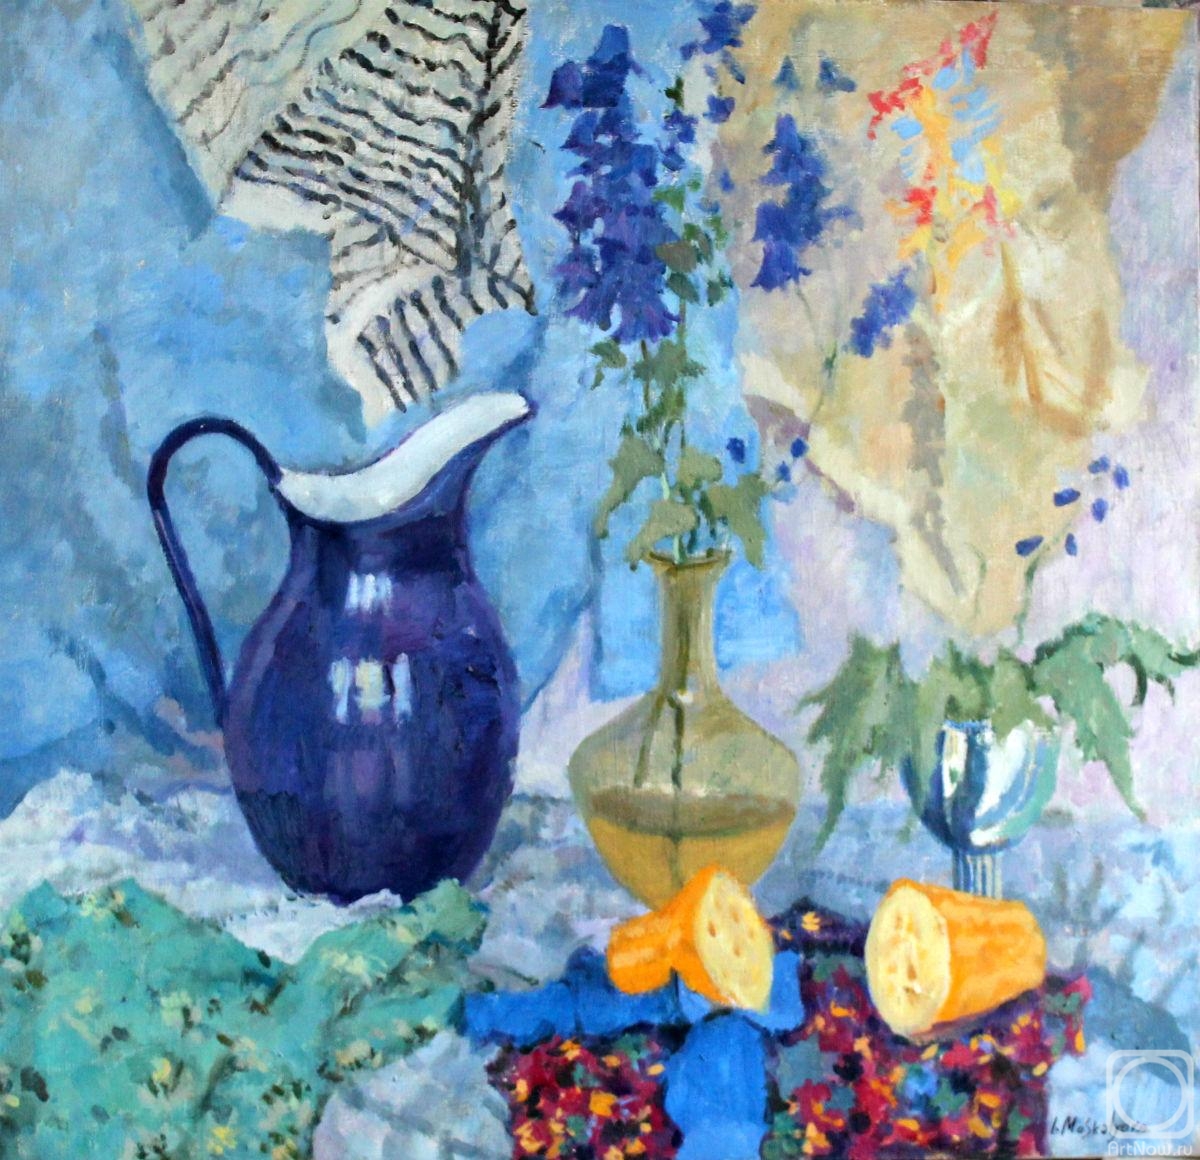 Moskaleva Irina. Blue jug and bells